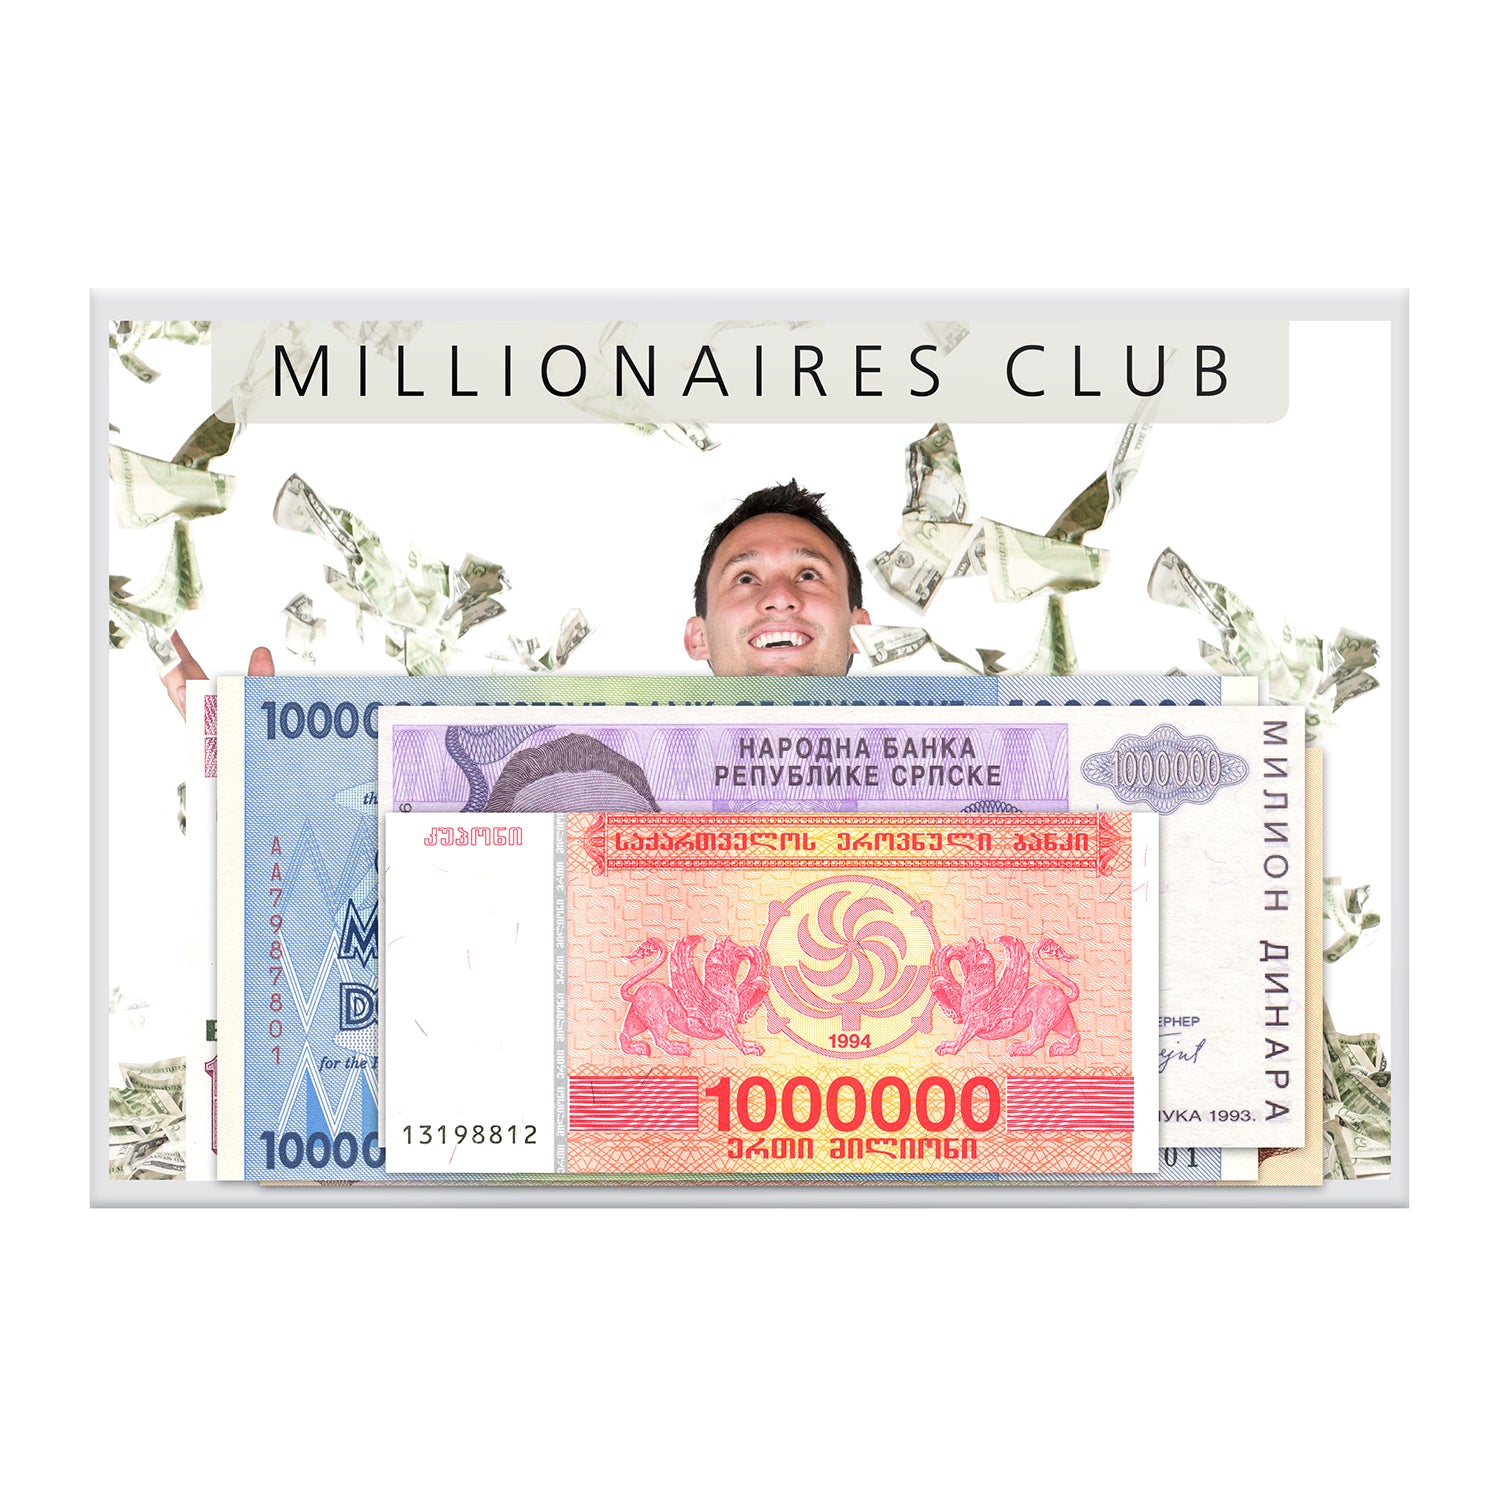 Billet Collection "Millionaires Club"